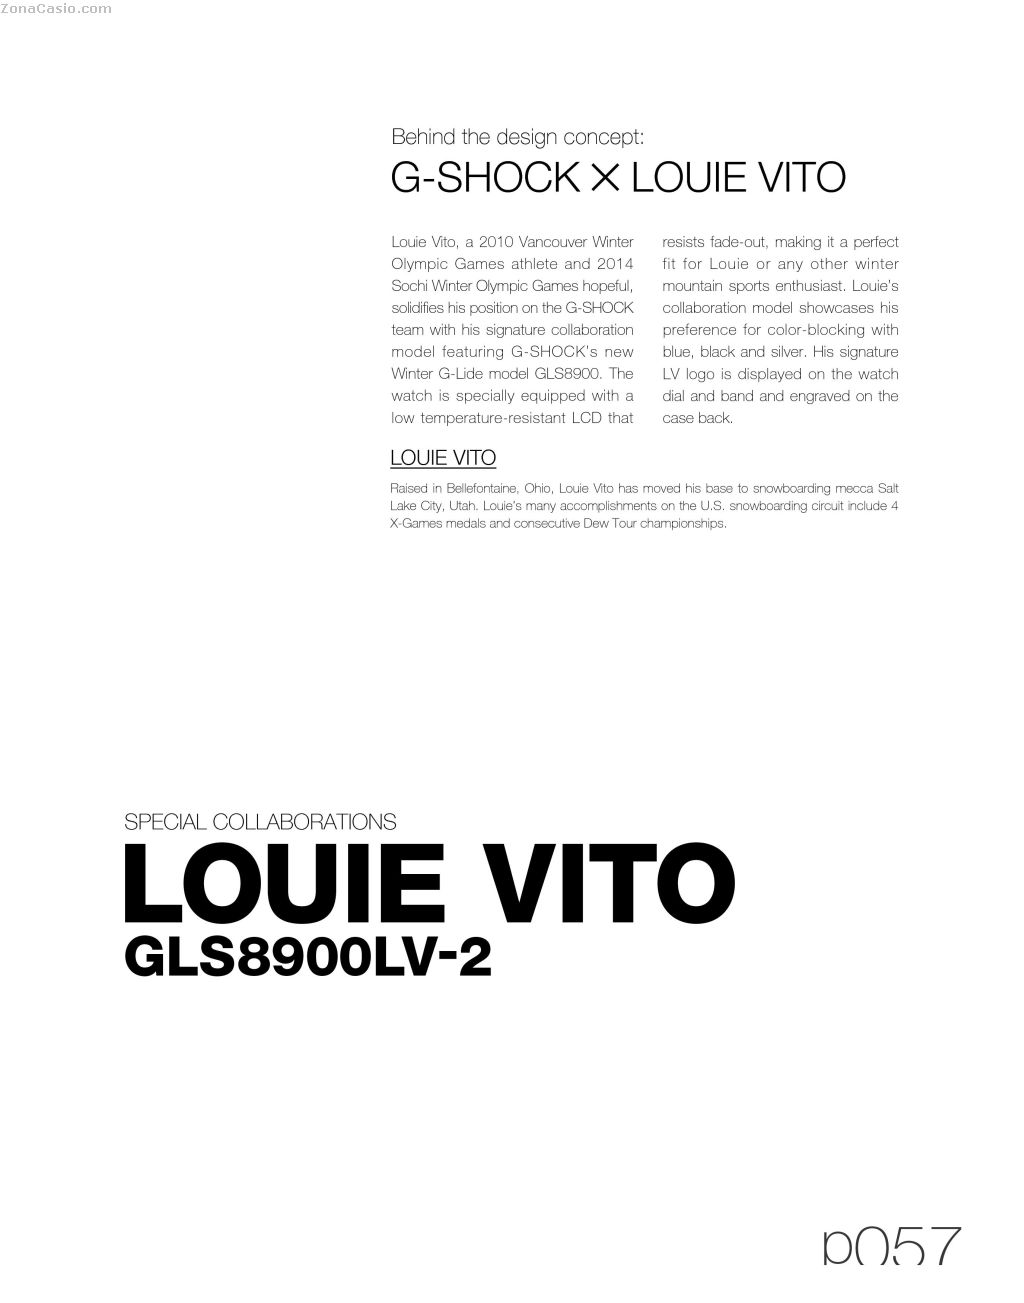 G-Shock verano 2013